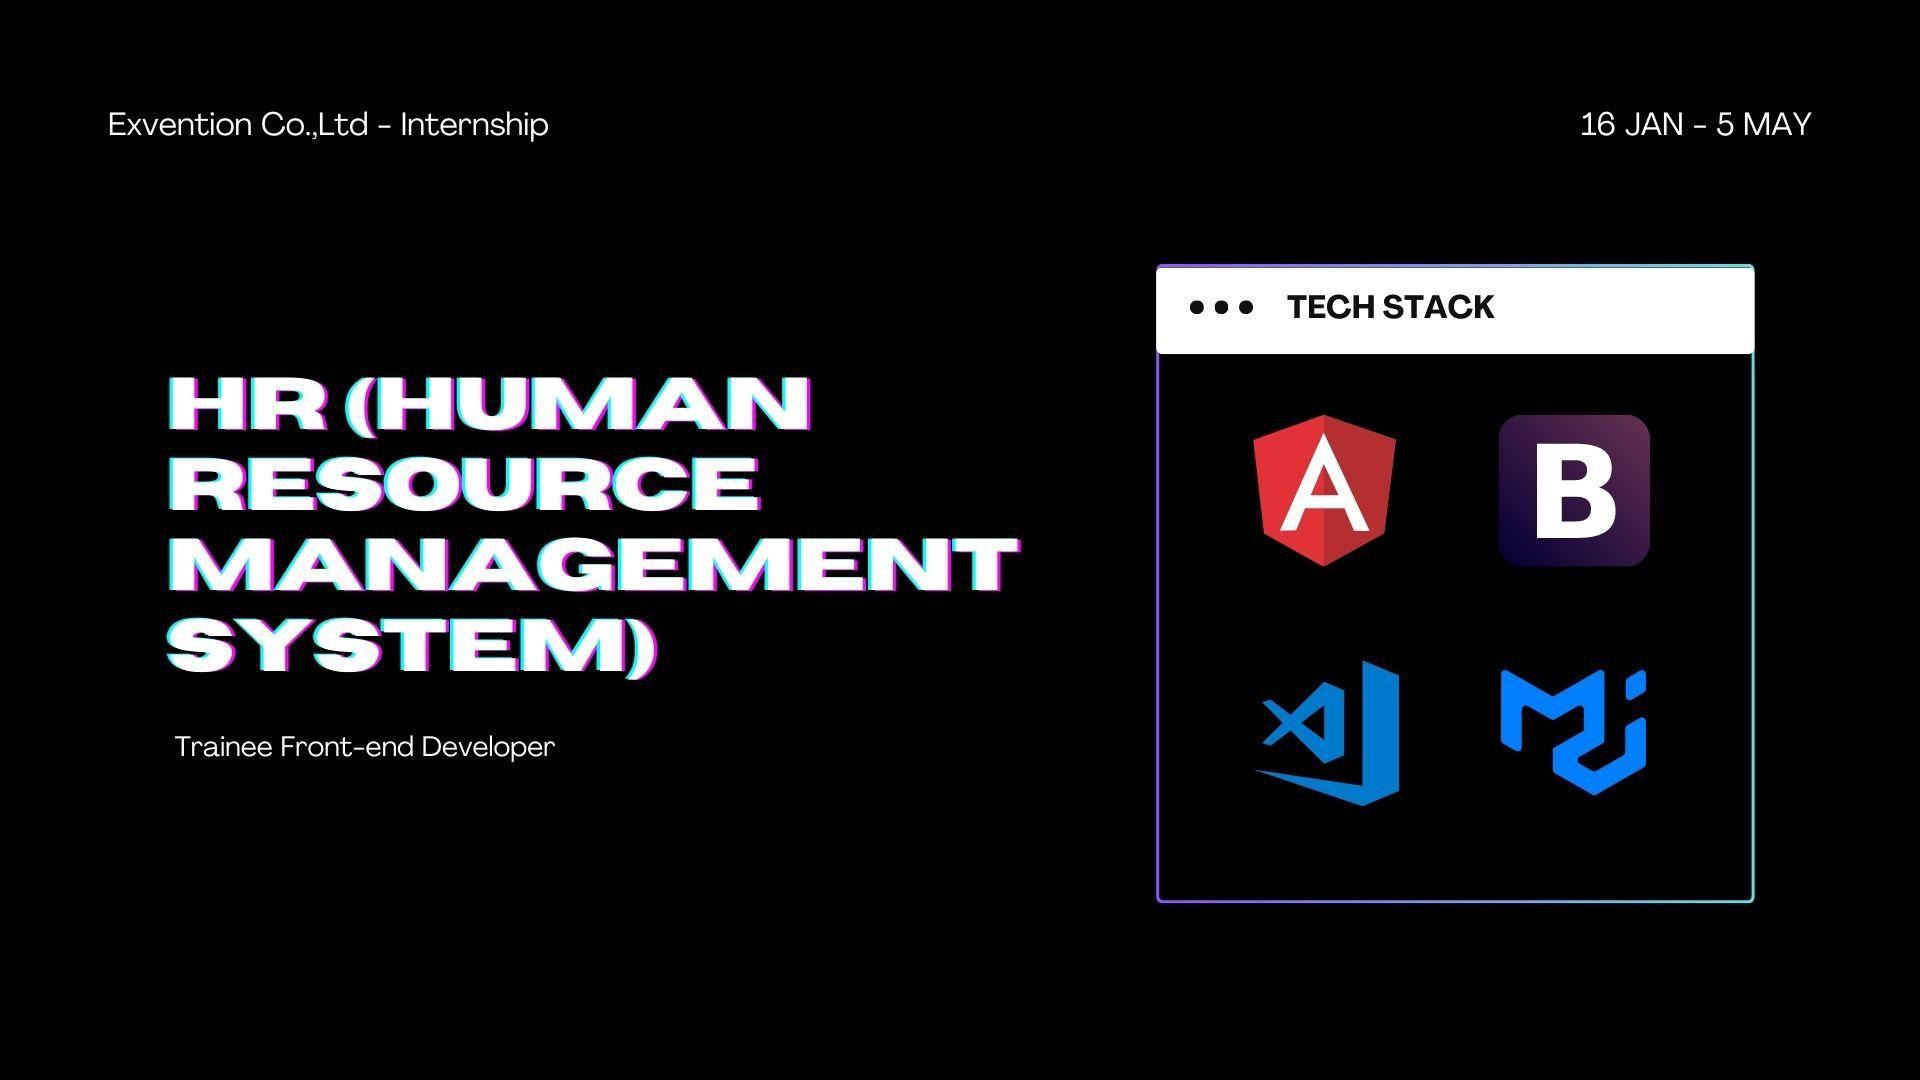 HR (Human Resource Management System)